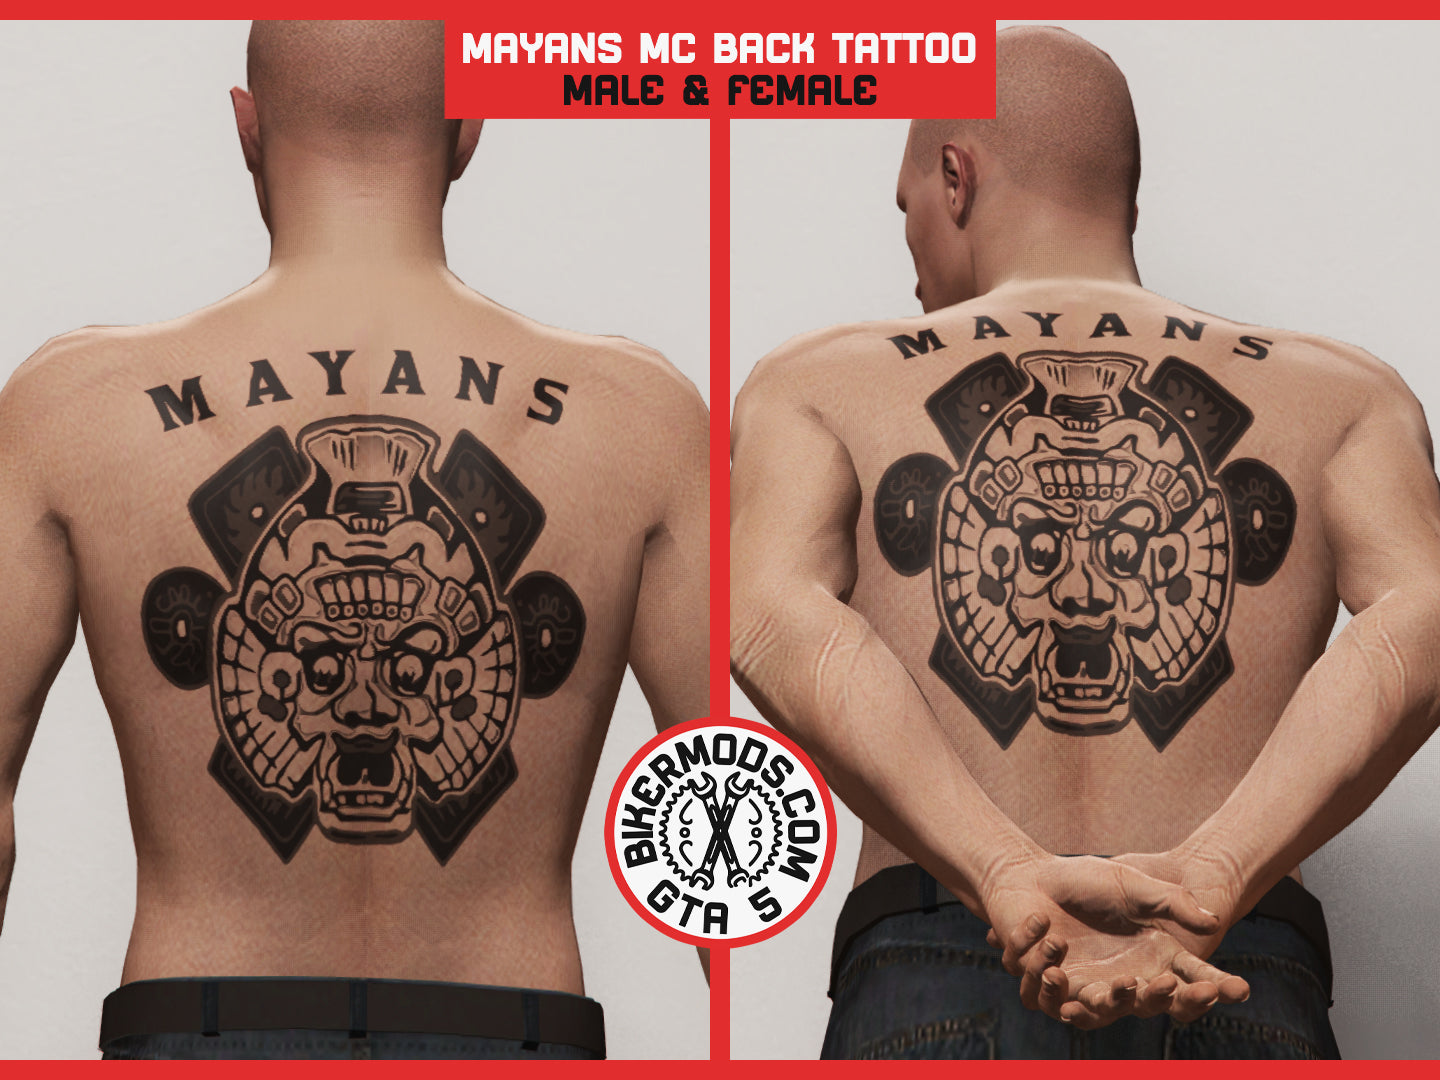 Mayans Back Tattoo